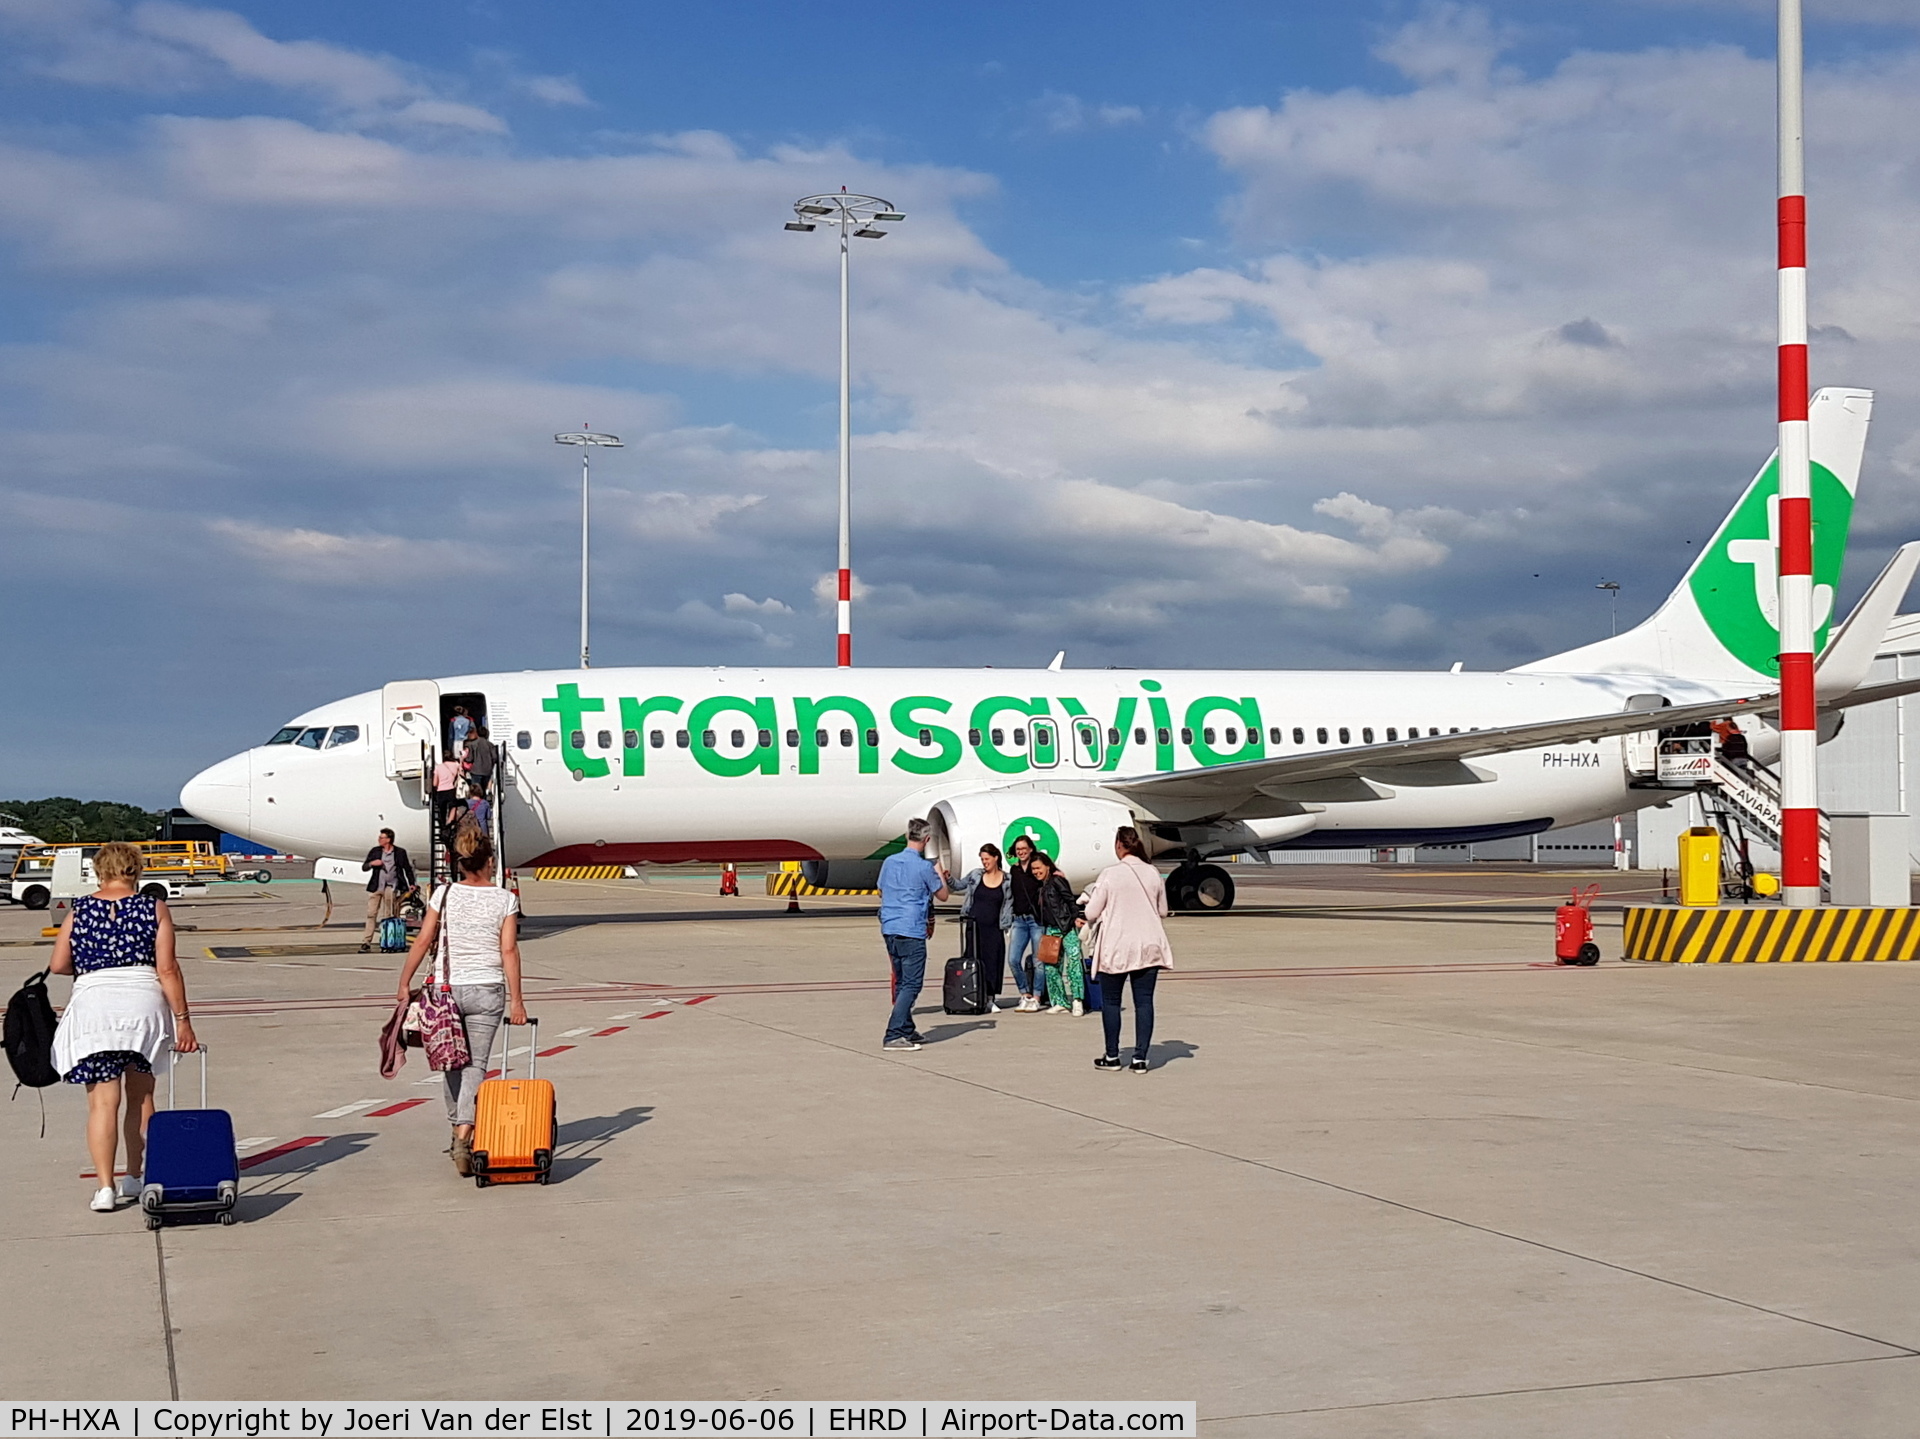 PH-HXA, 2016 Boeing 737-8K2 C/N 62149, Embarking for Ibiza taken by An Van der Elst with permission